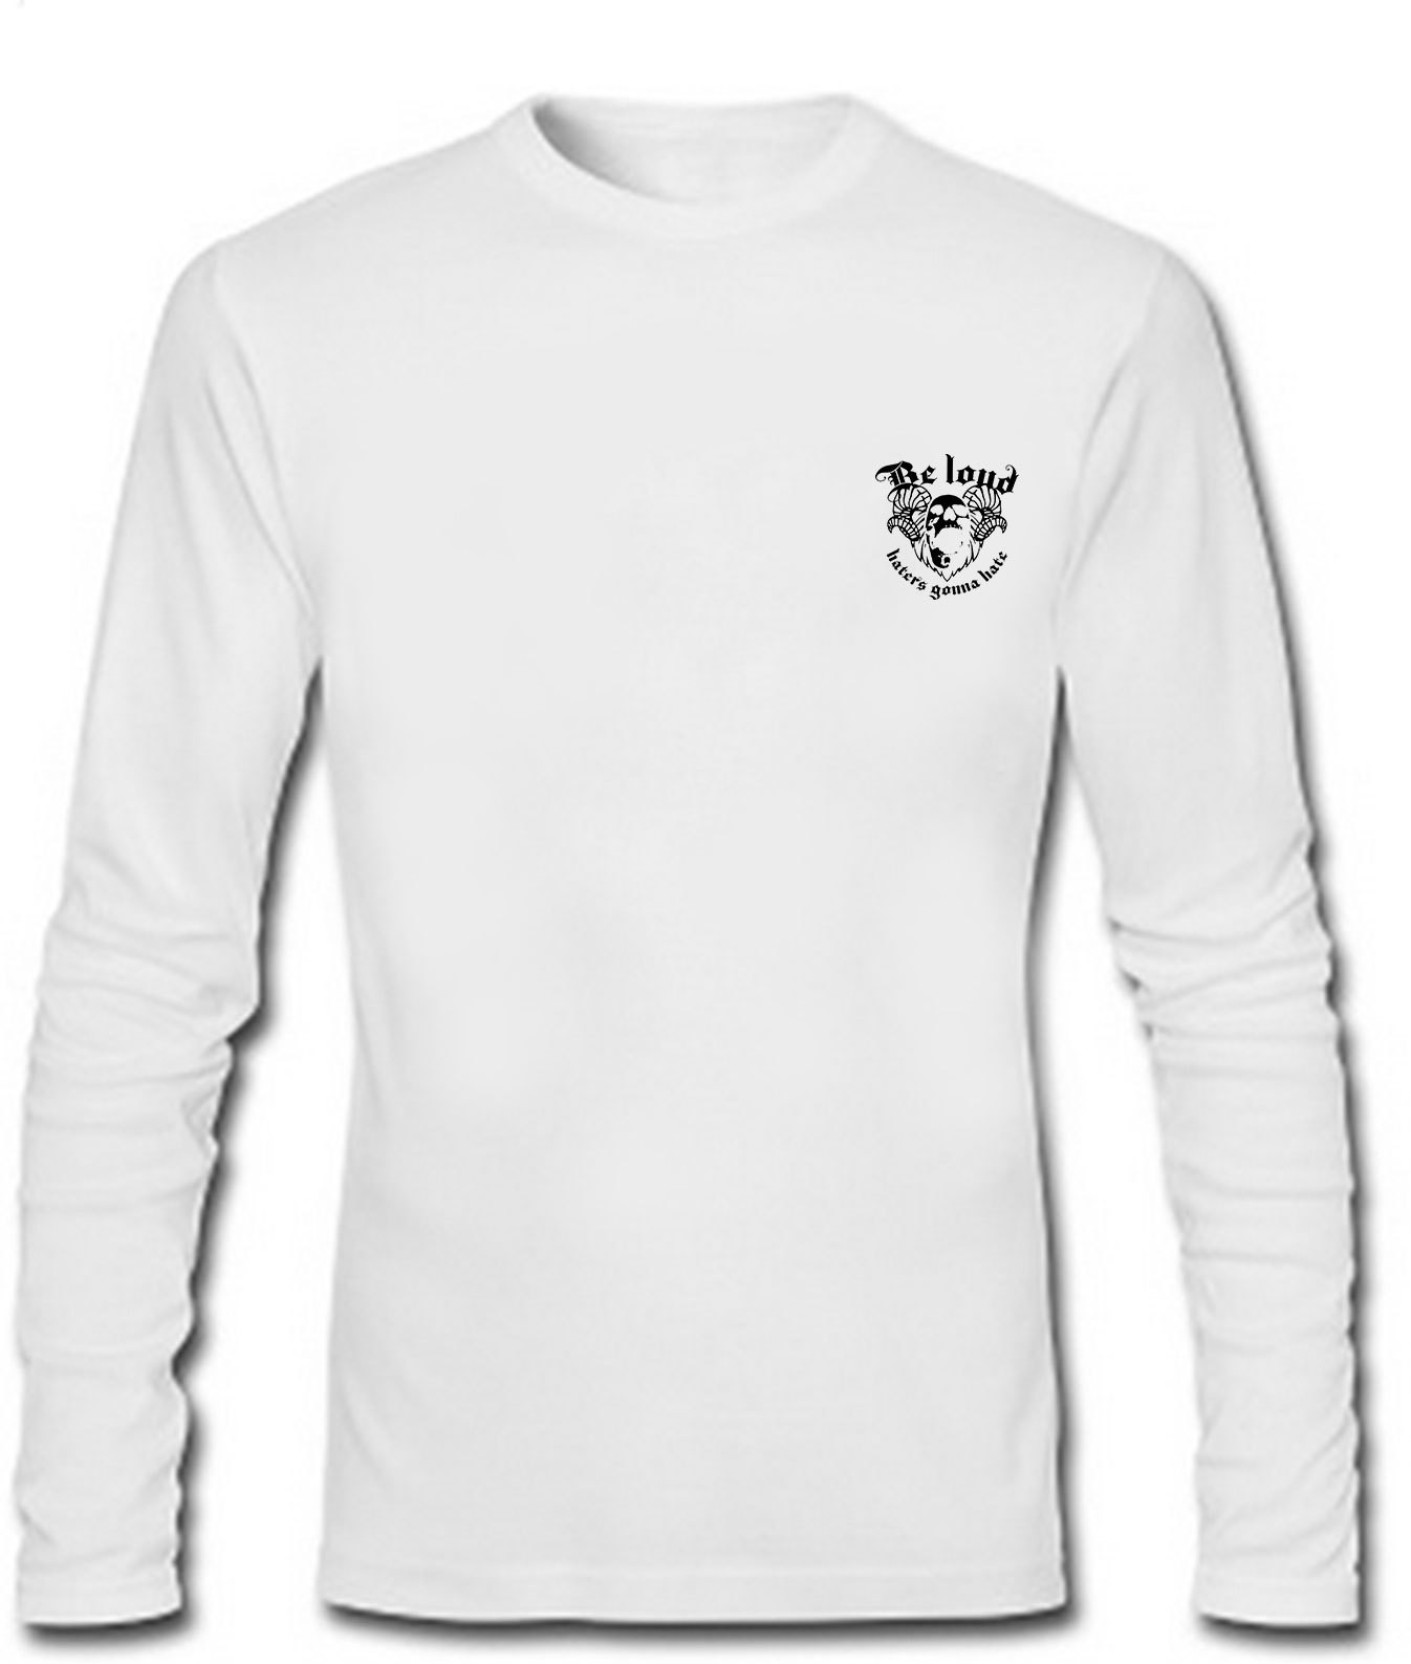 Sayitloud Printed Men's Round Neck White T-Shirt - Buy White Sayitloud ...